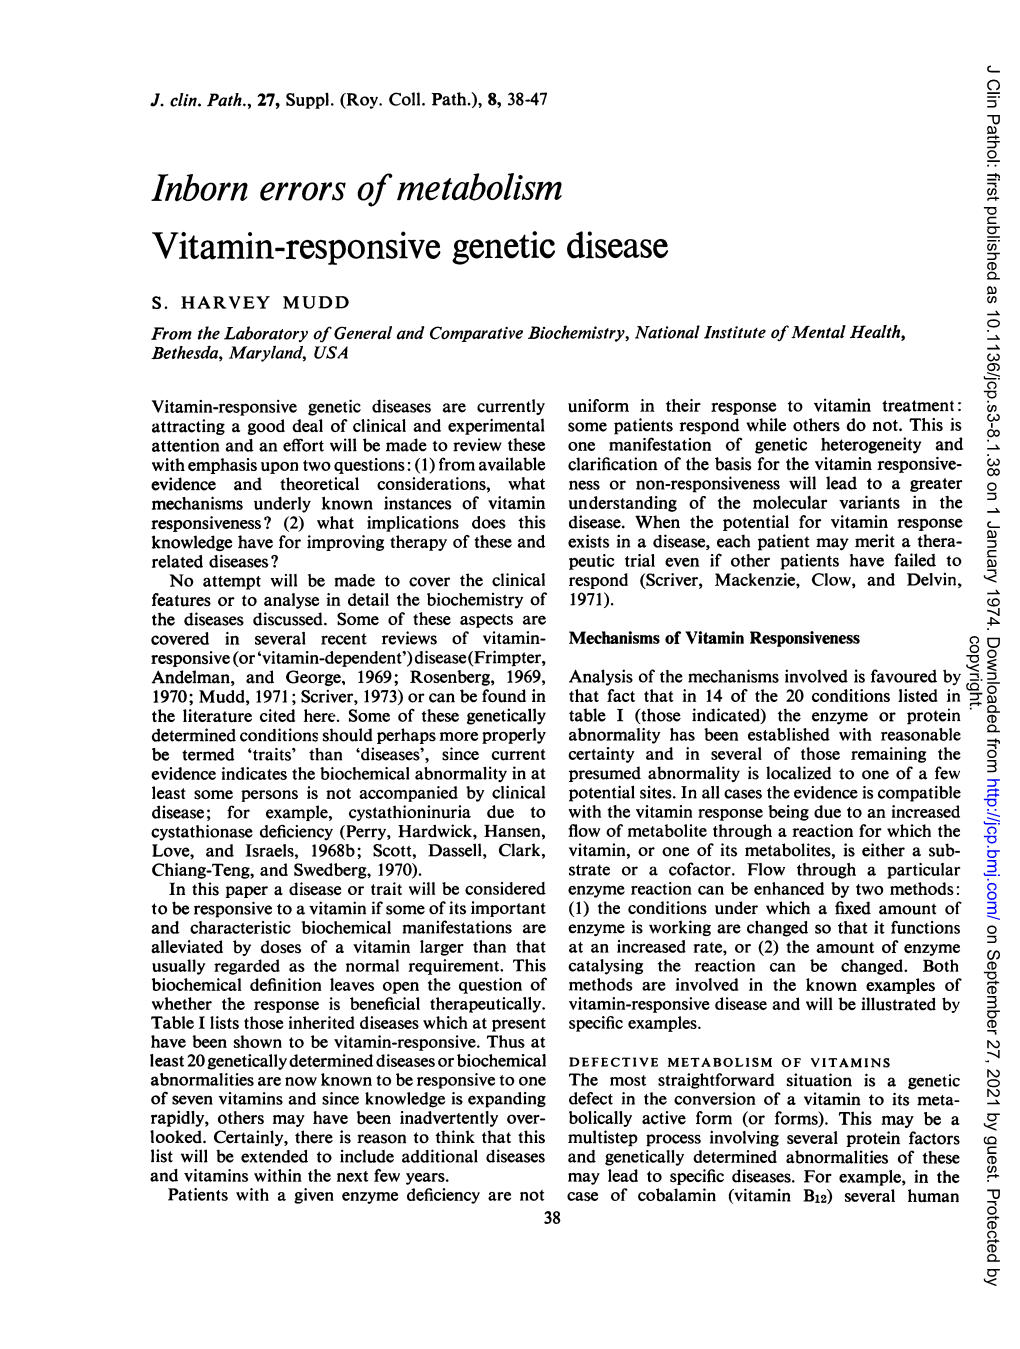 Inborn Errors Ofmetabolism Vitamin-Responsive Genetic Disease